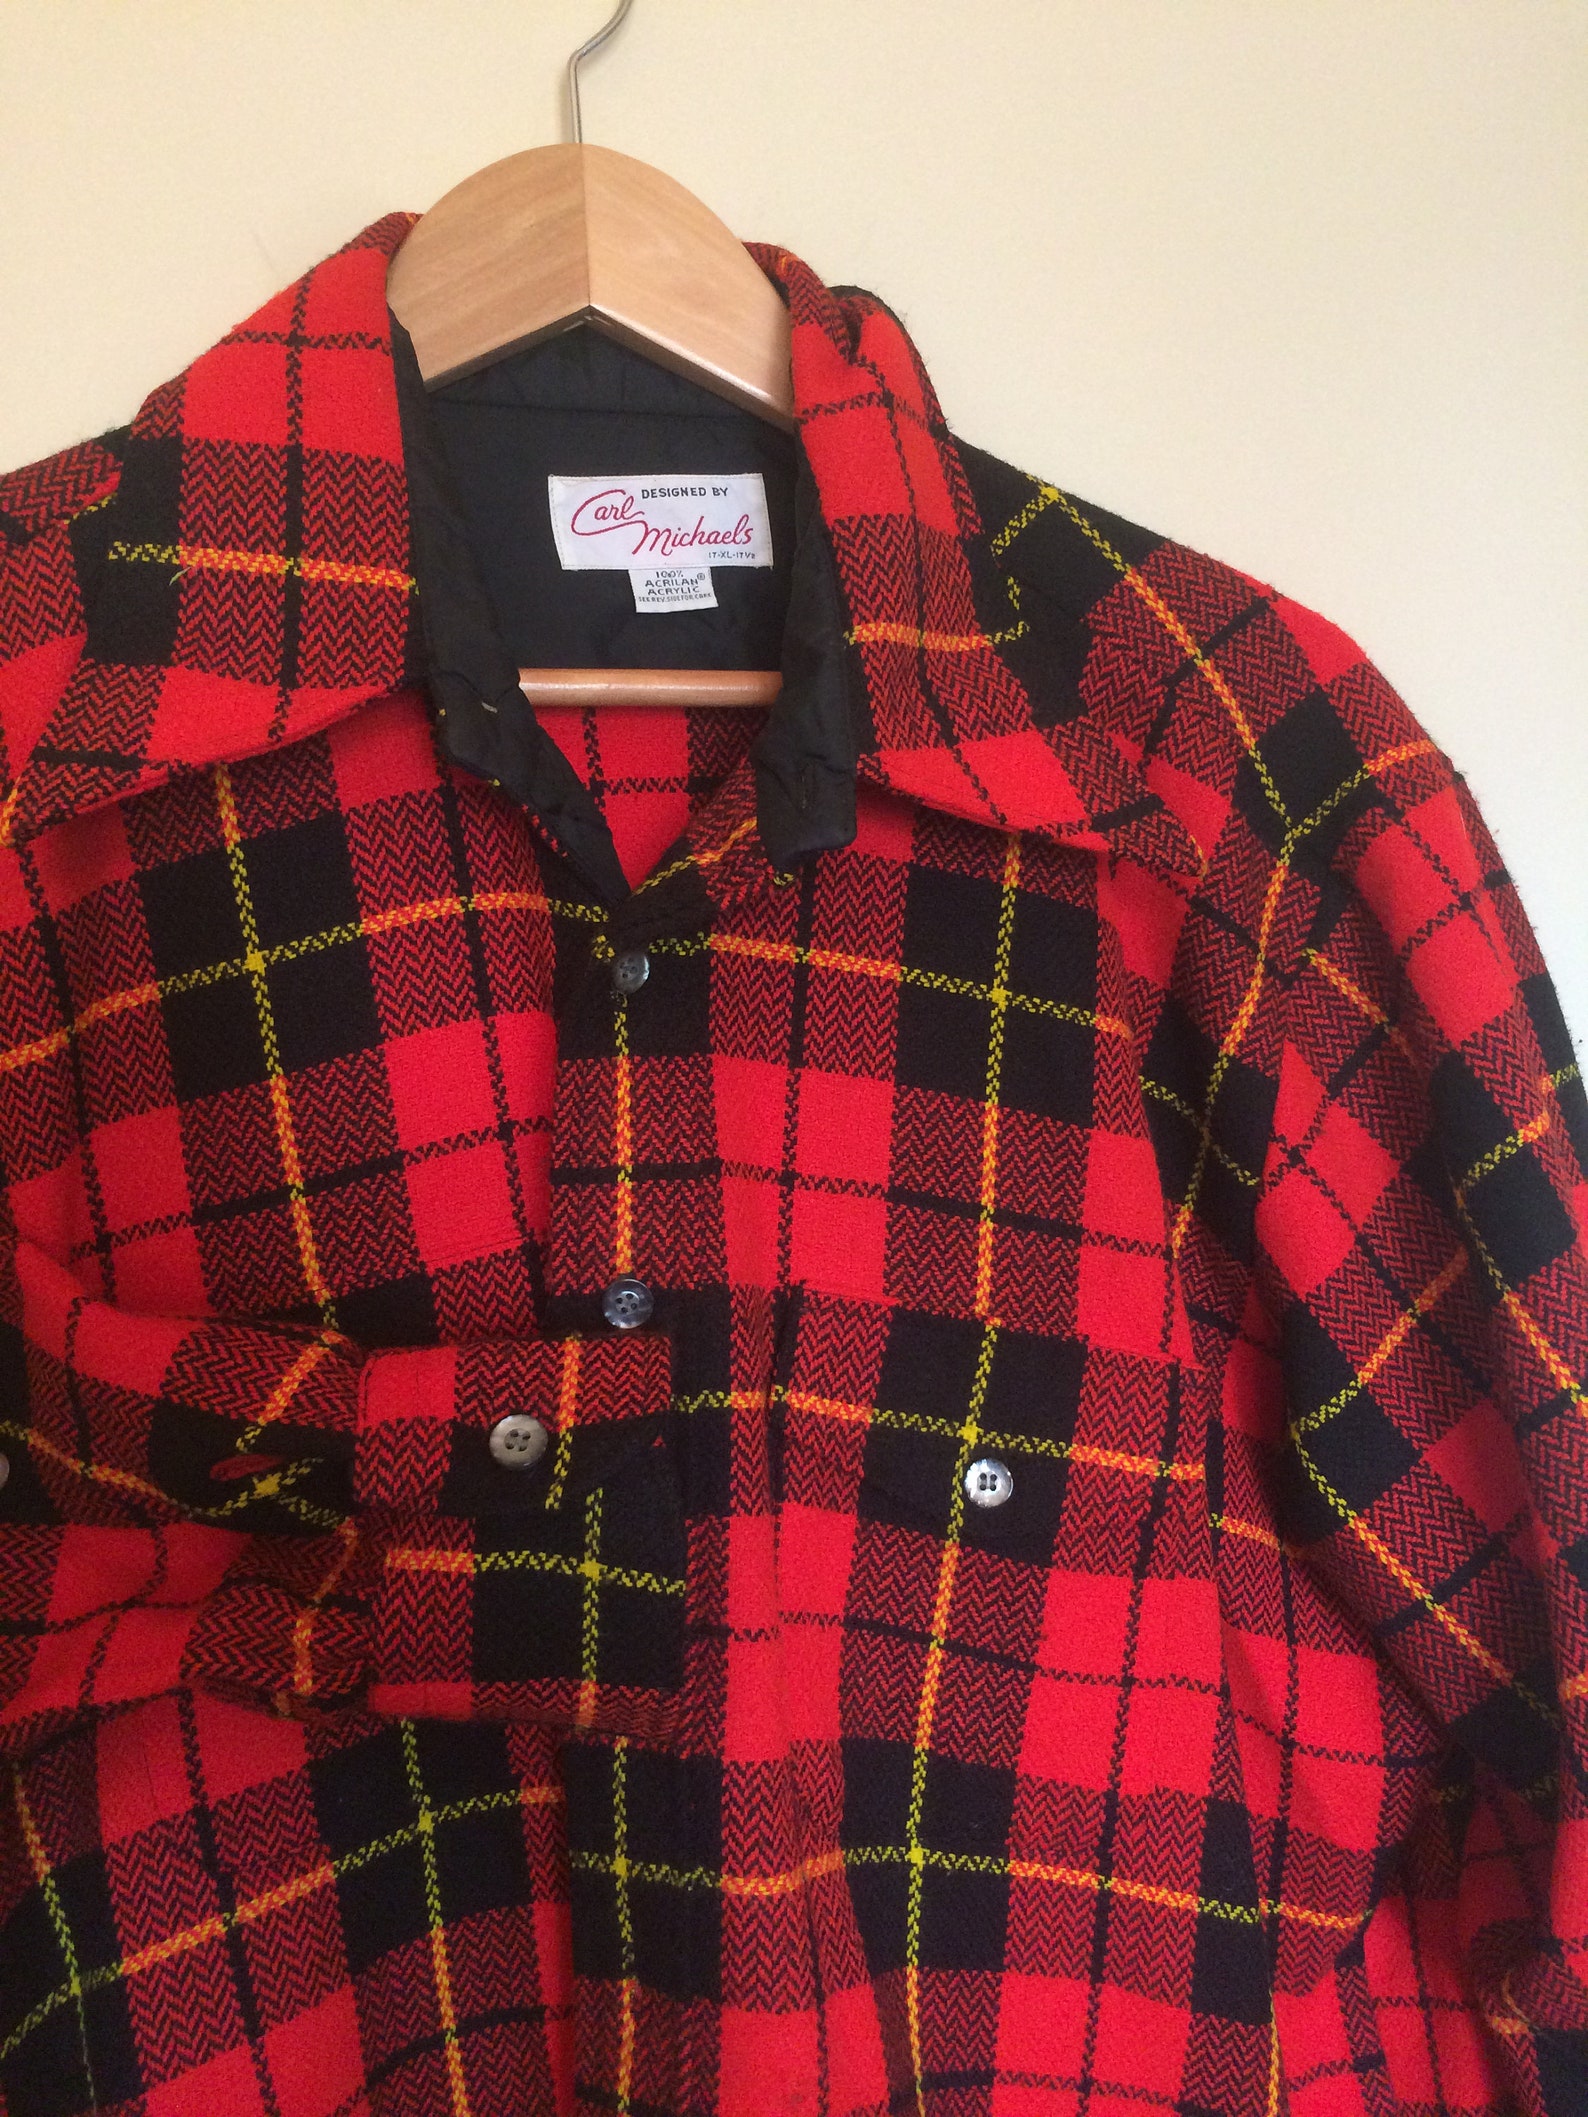 Red Plaid Jacket Vintage Lumberjack Chorecoat Flannel | Etsy